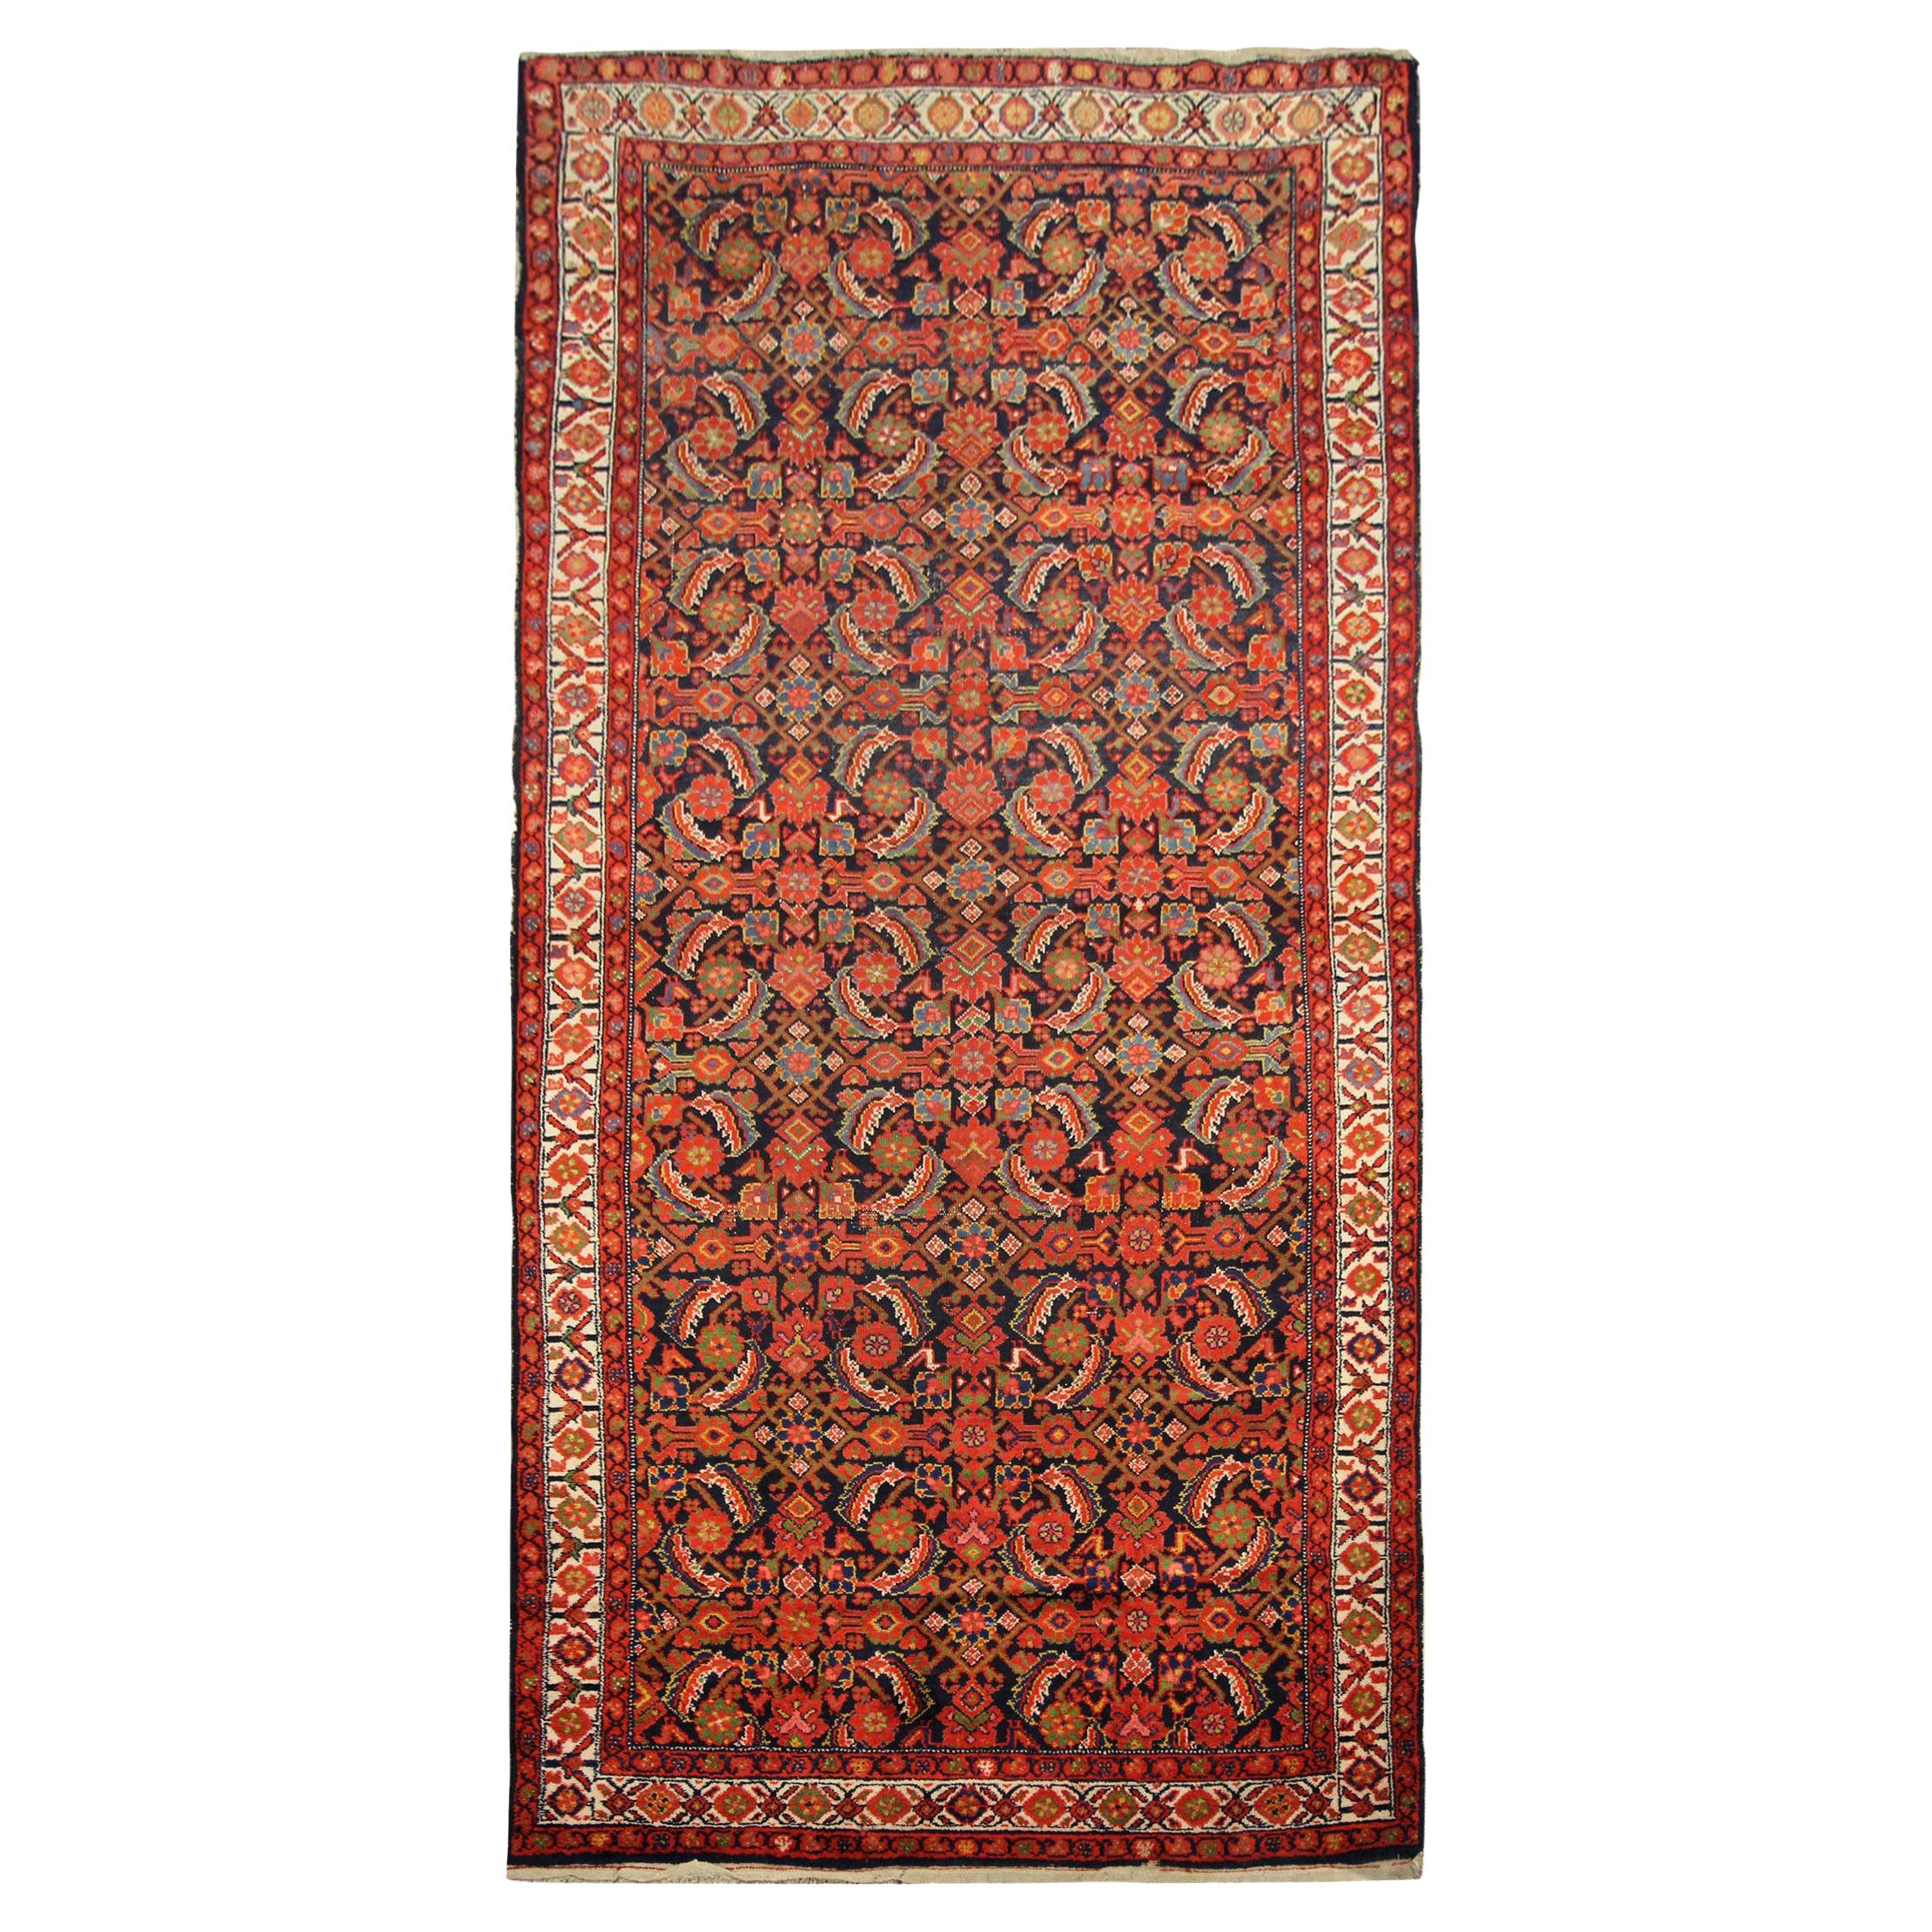 Antique Rugs Handwoven Oriental Wool Orange Red Traditional Carpet